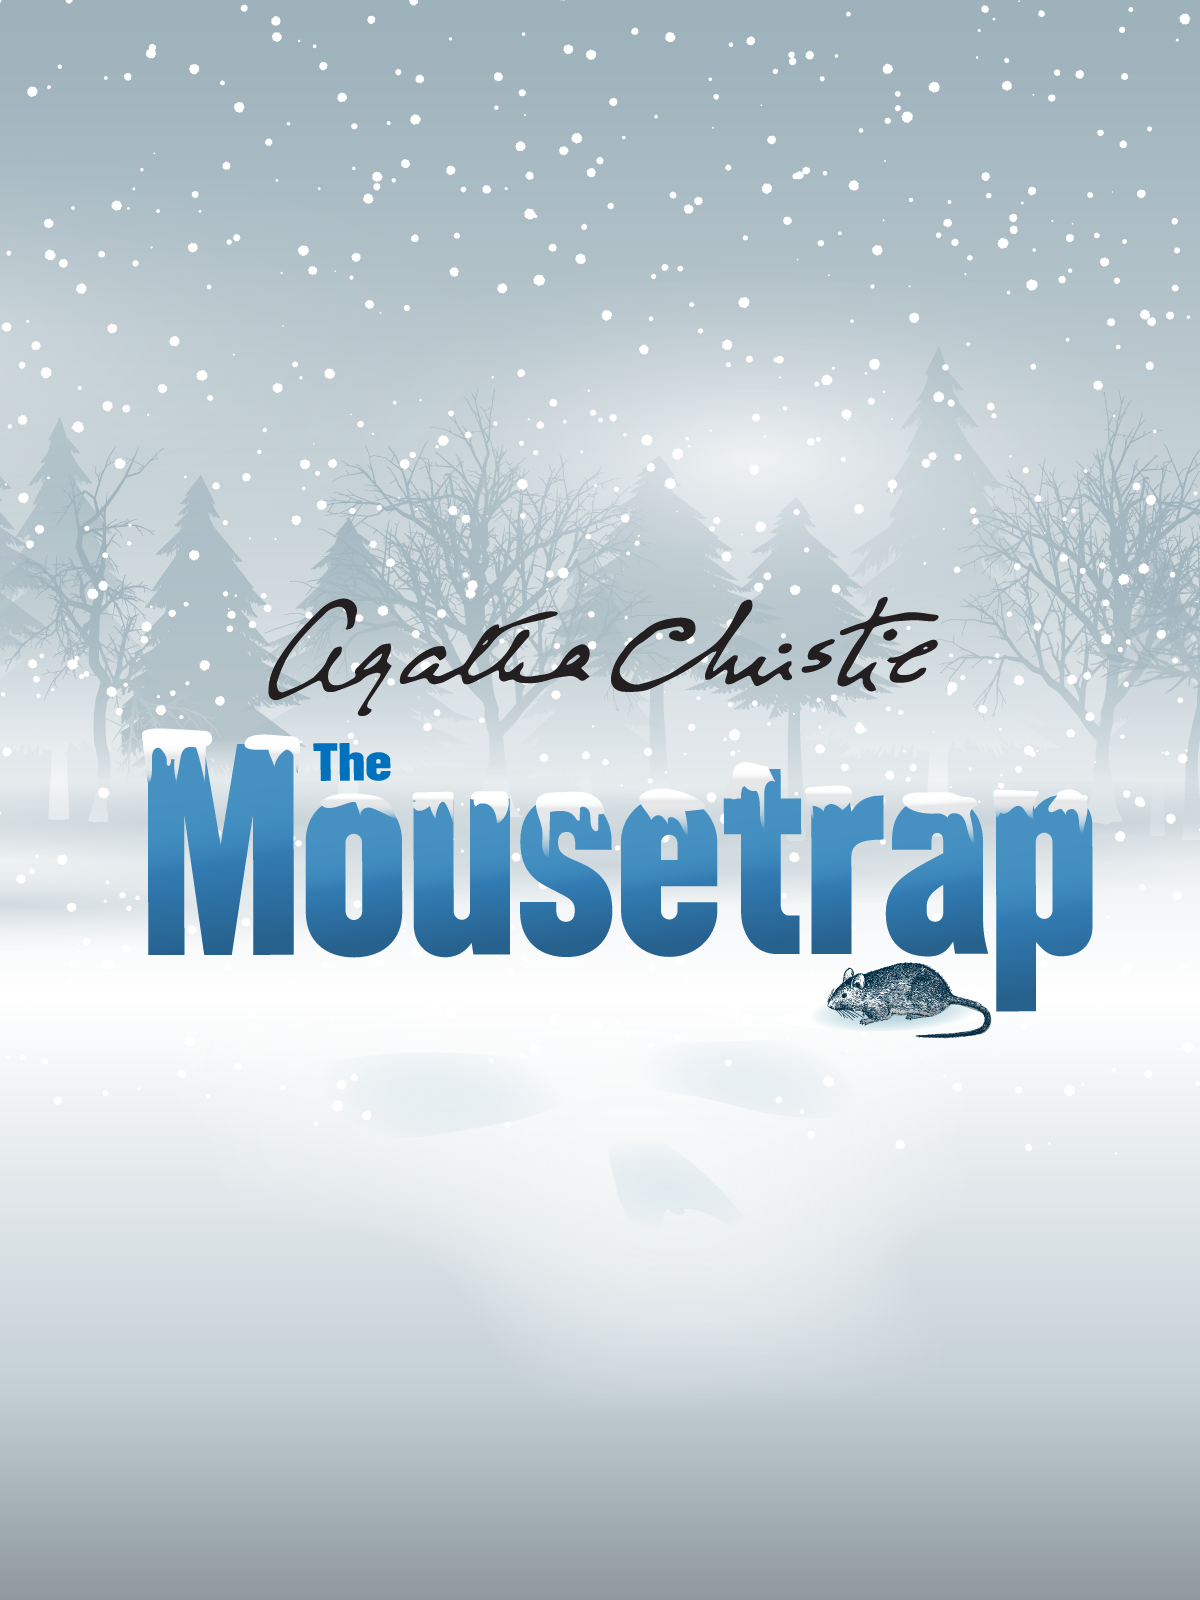 The Mousetrap by Agatha Christie - Agatha Christie